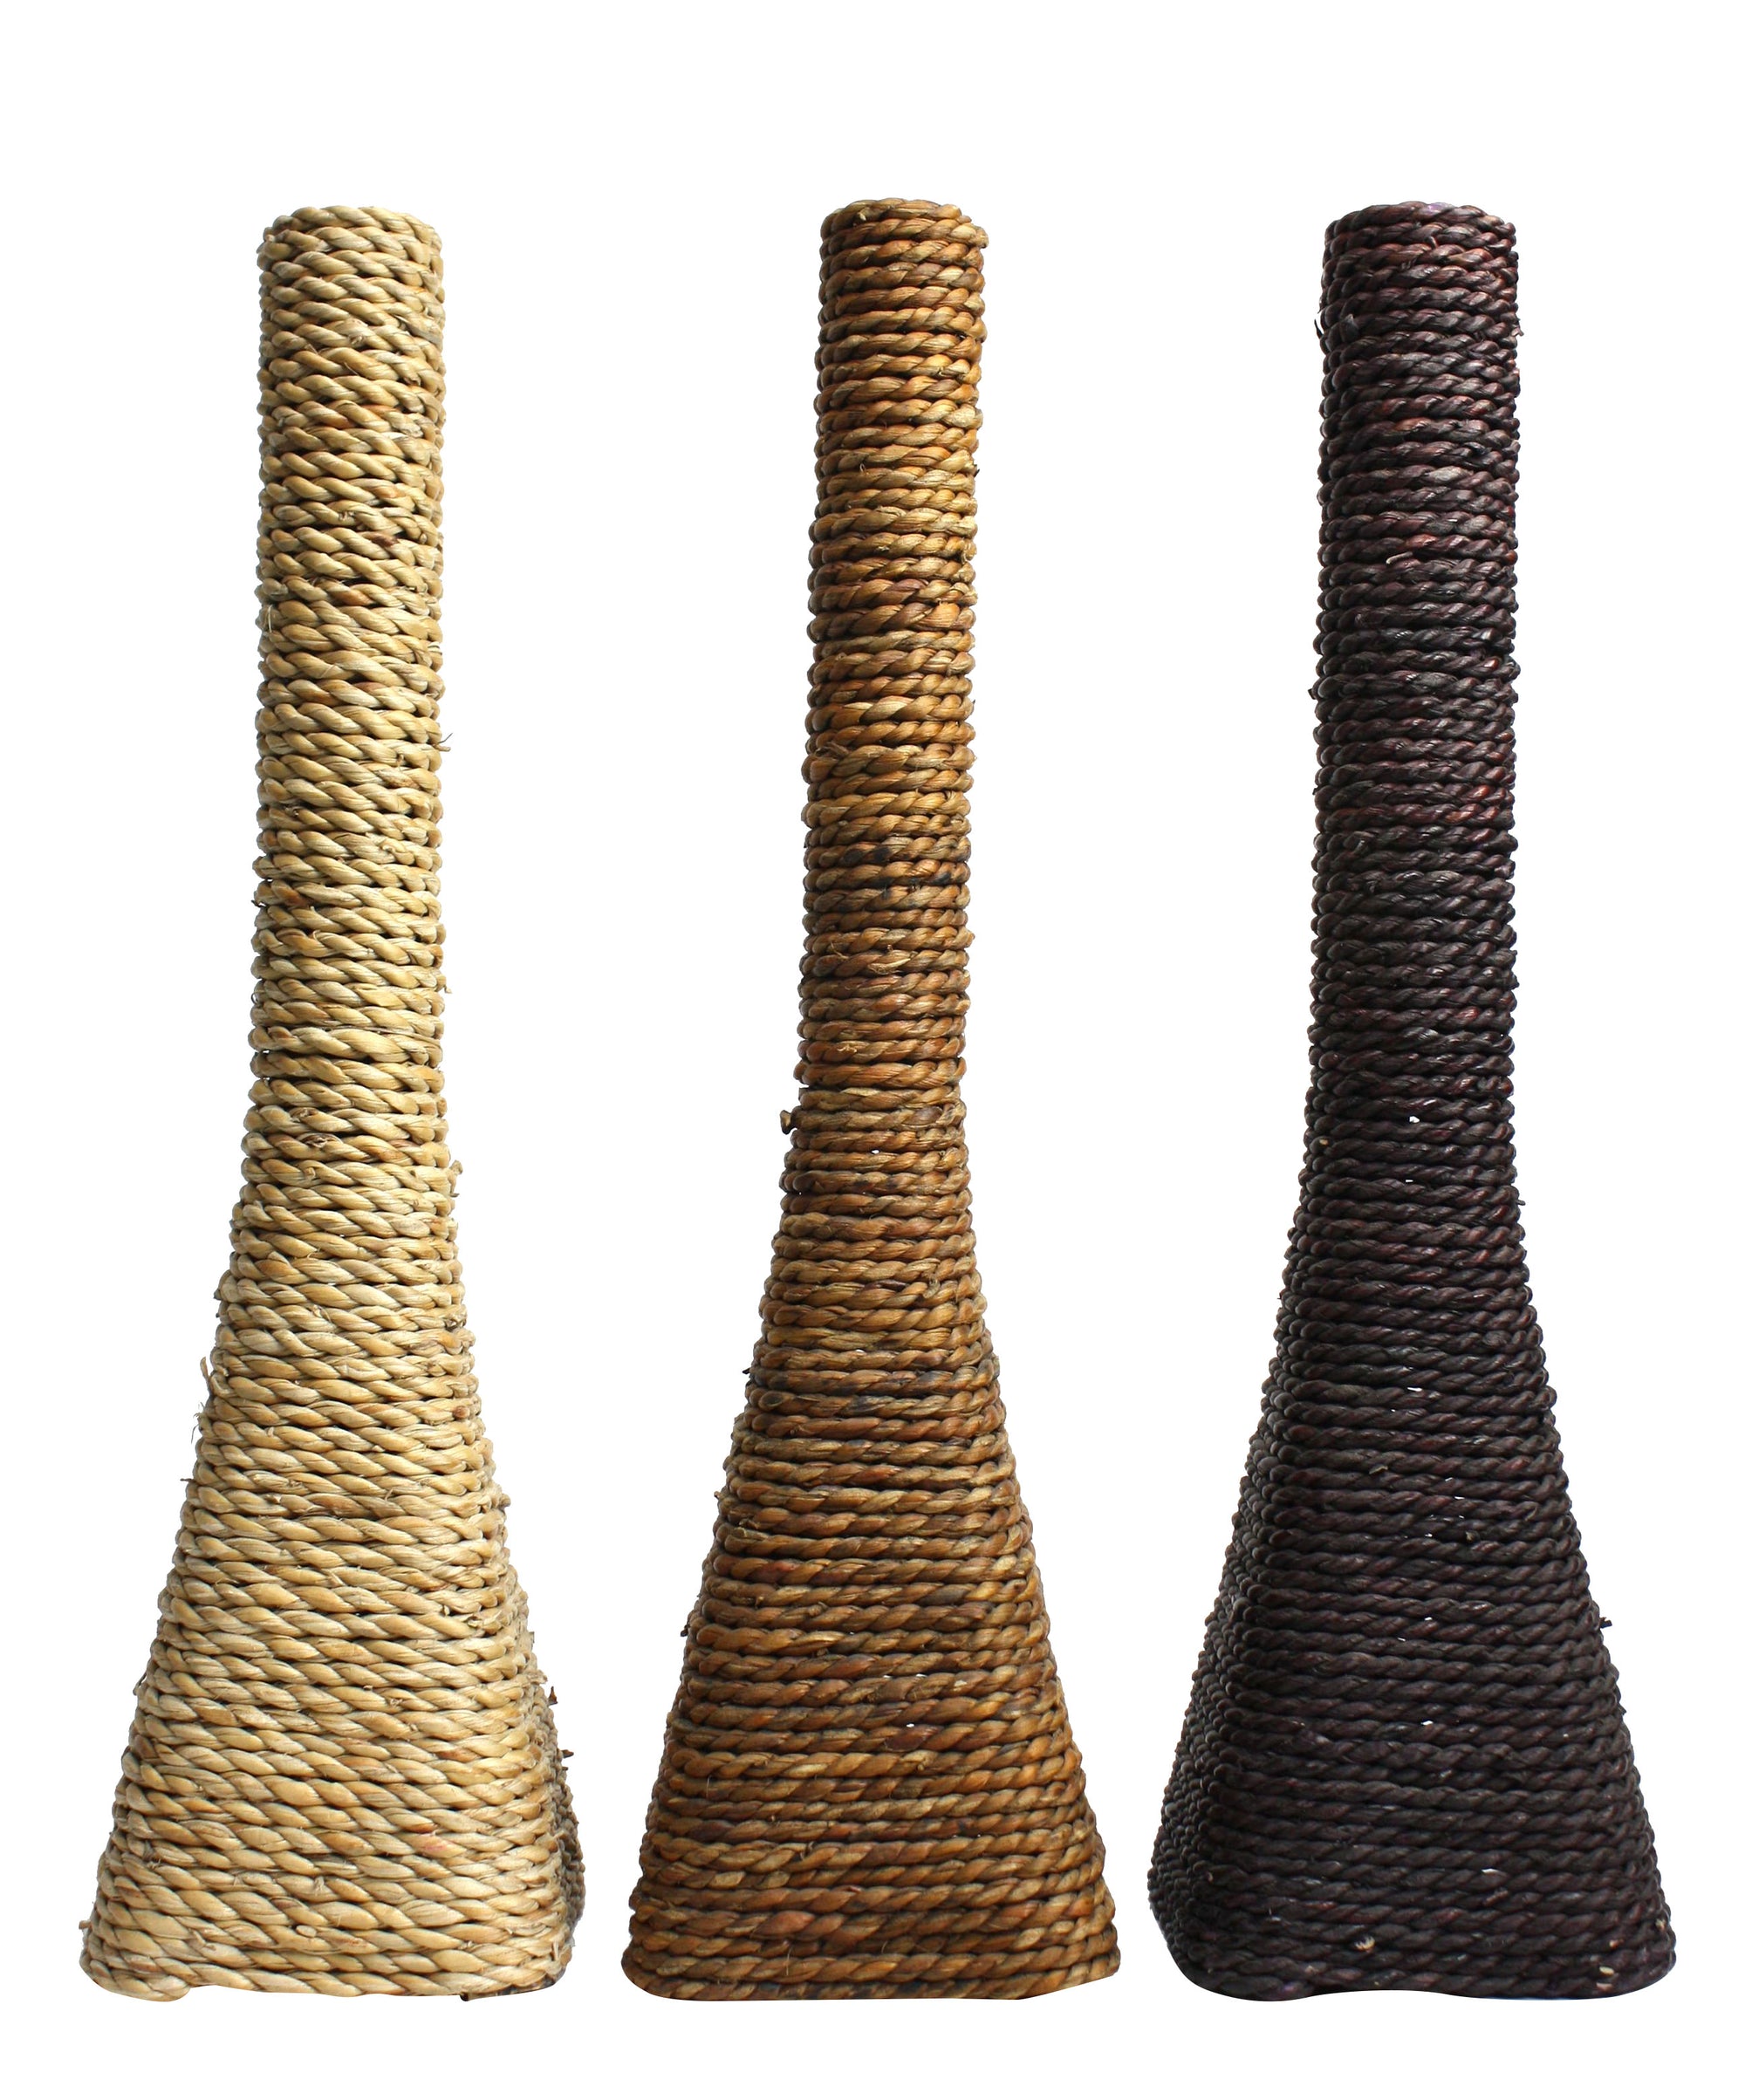 Thai Water Hyacinth Vases, 50cm high - 3 colours available. - farangshop-co